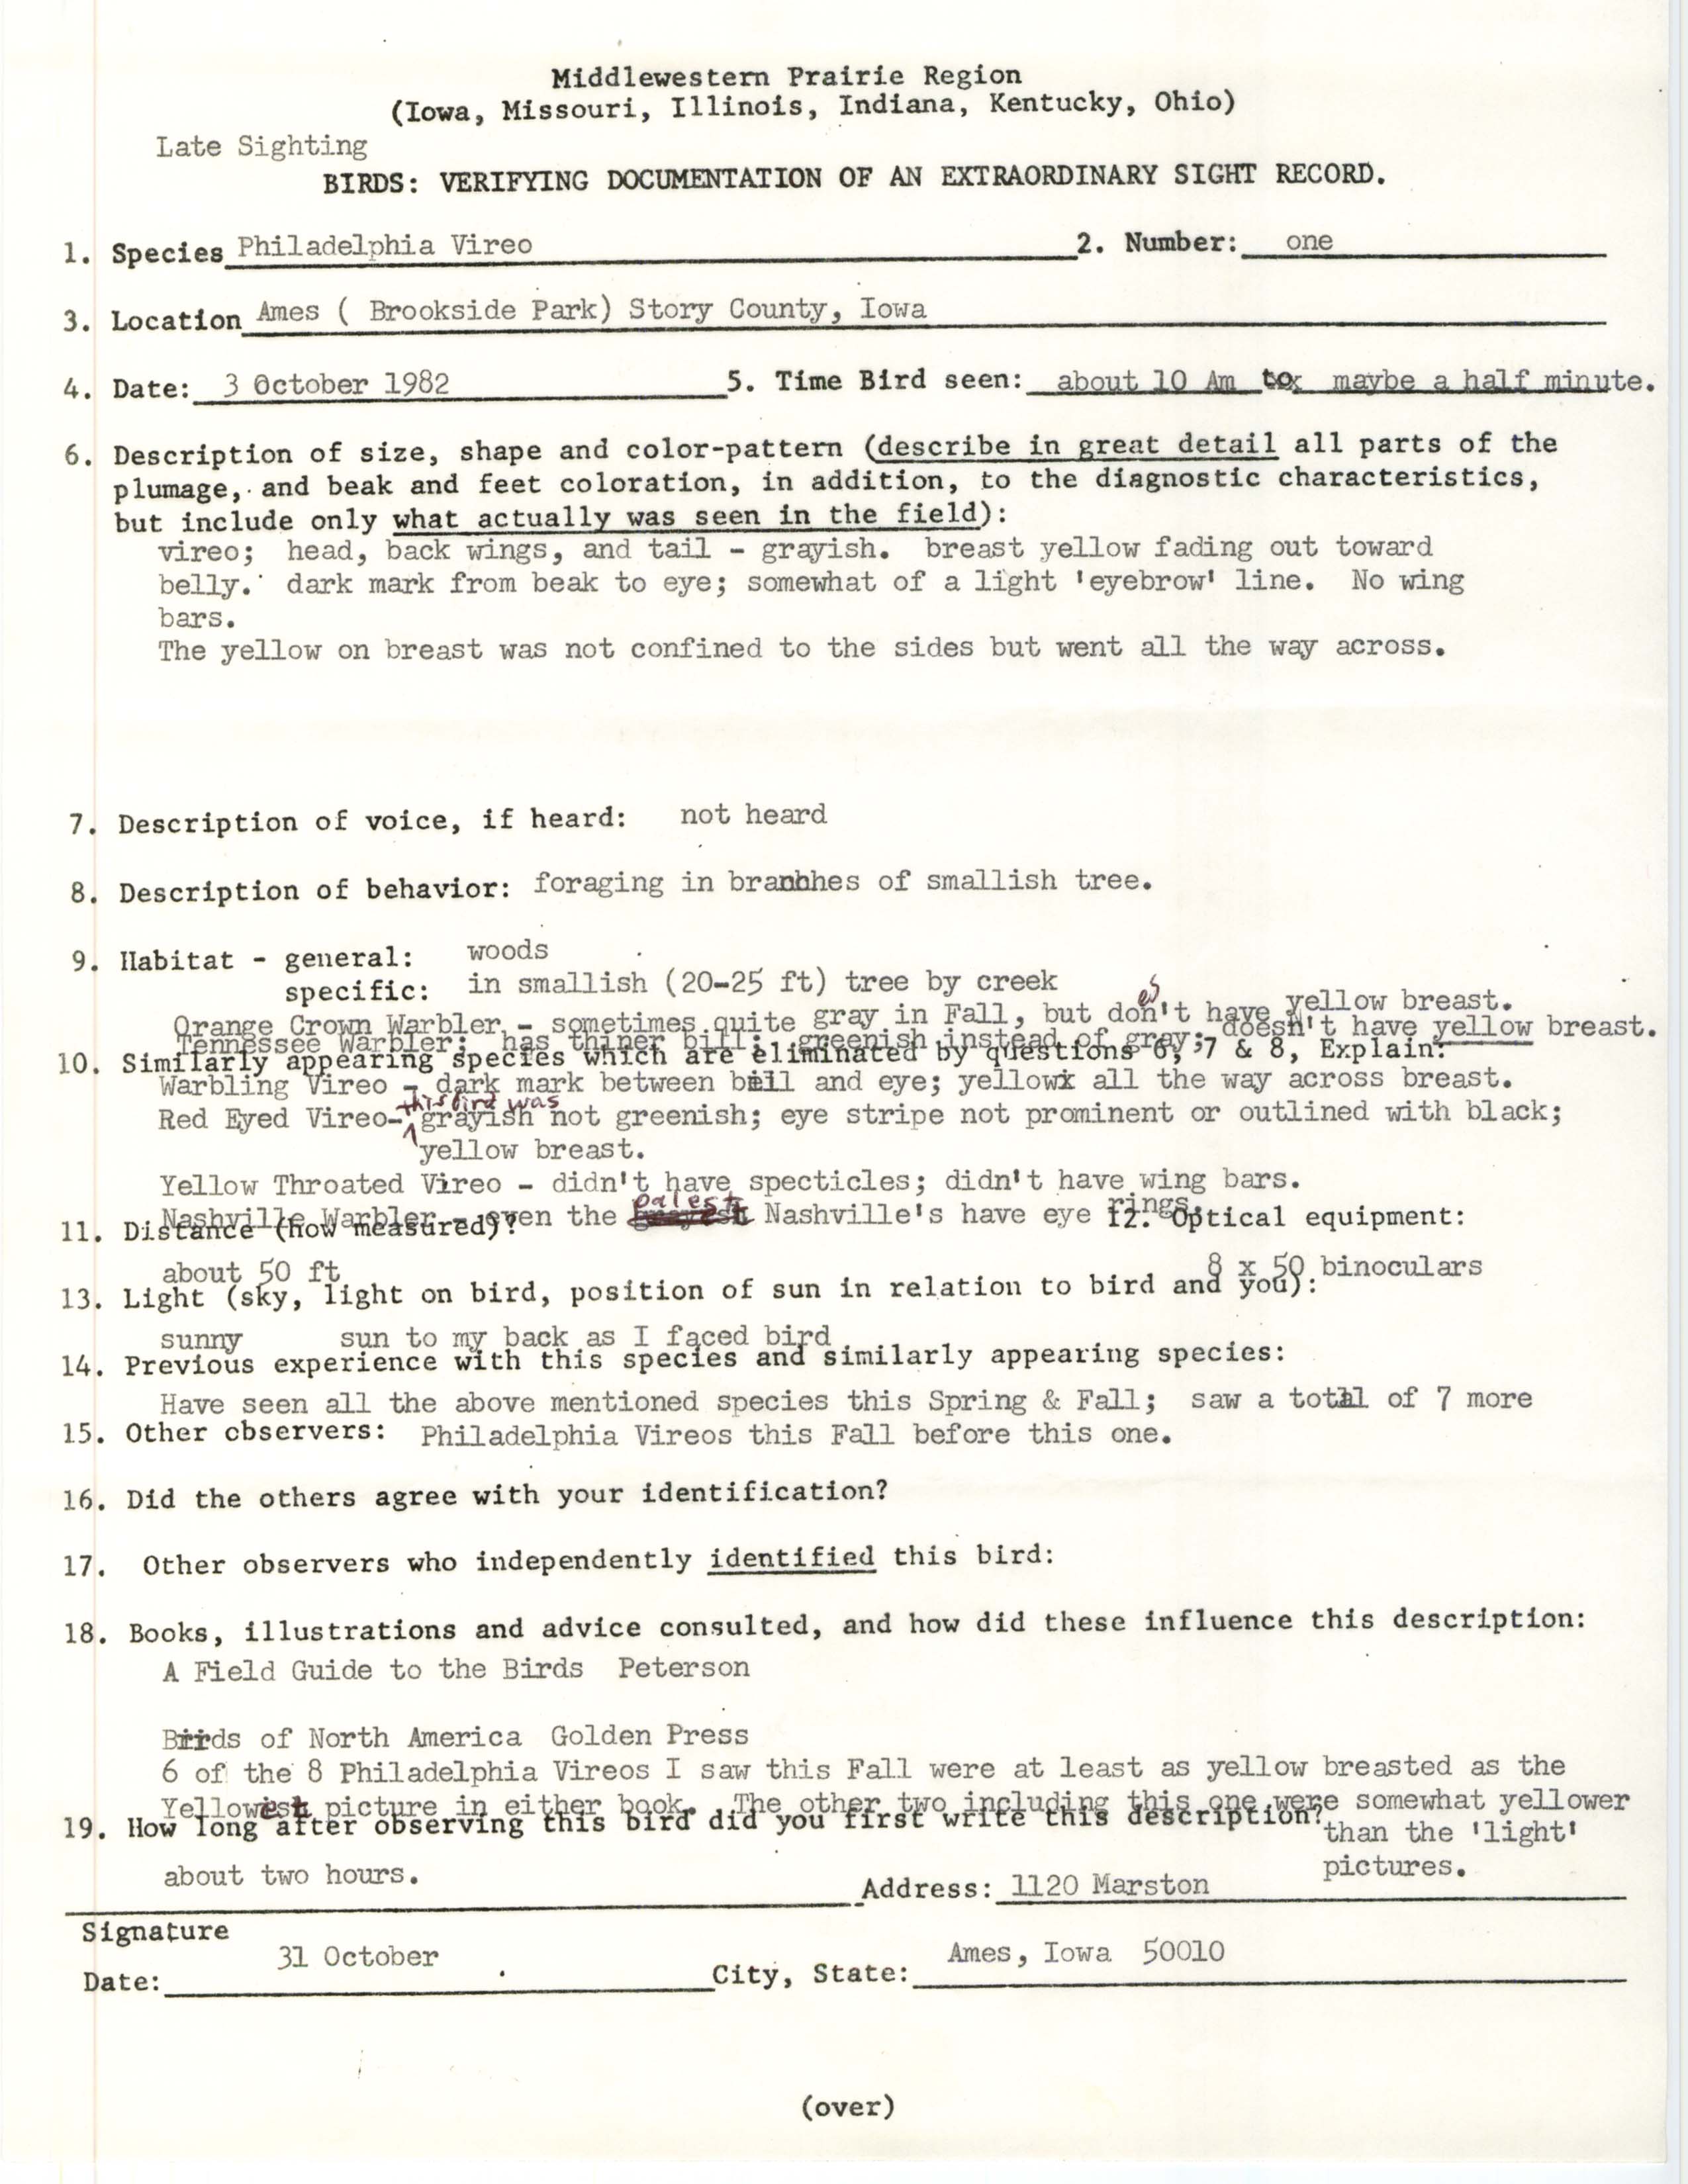 Rare bird documentation form for Philadelphia Vireo at Brookside Park in Ames, 1982